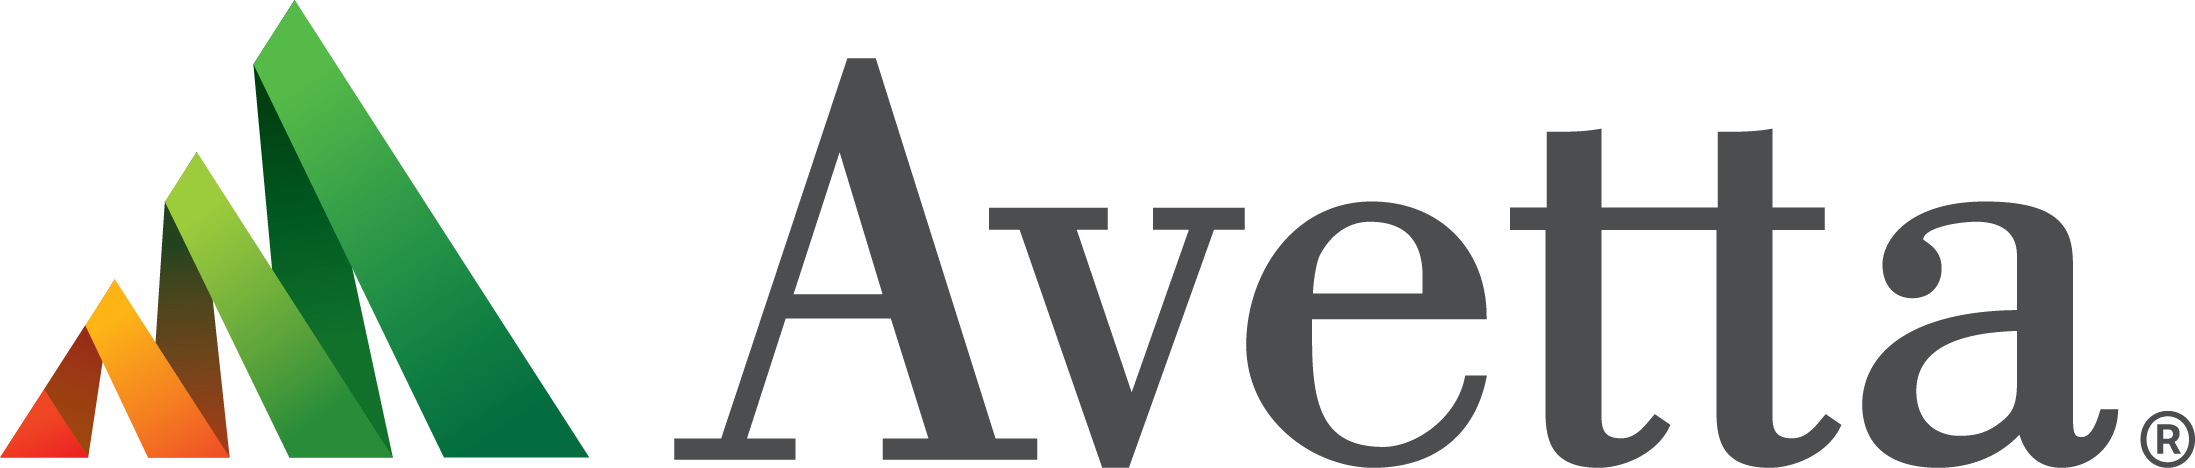 client-logo-avetta